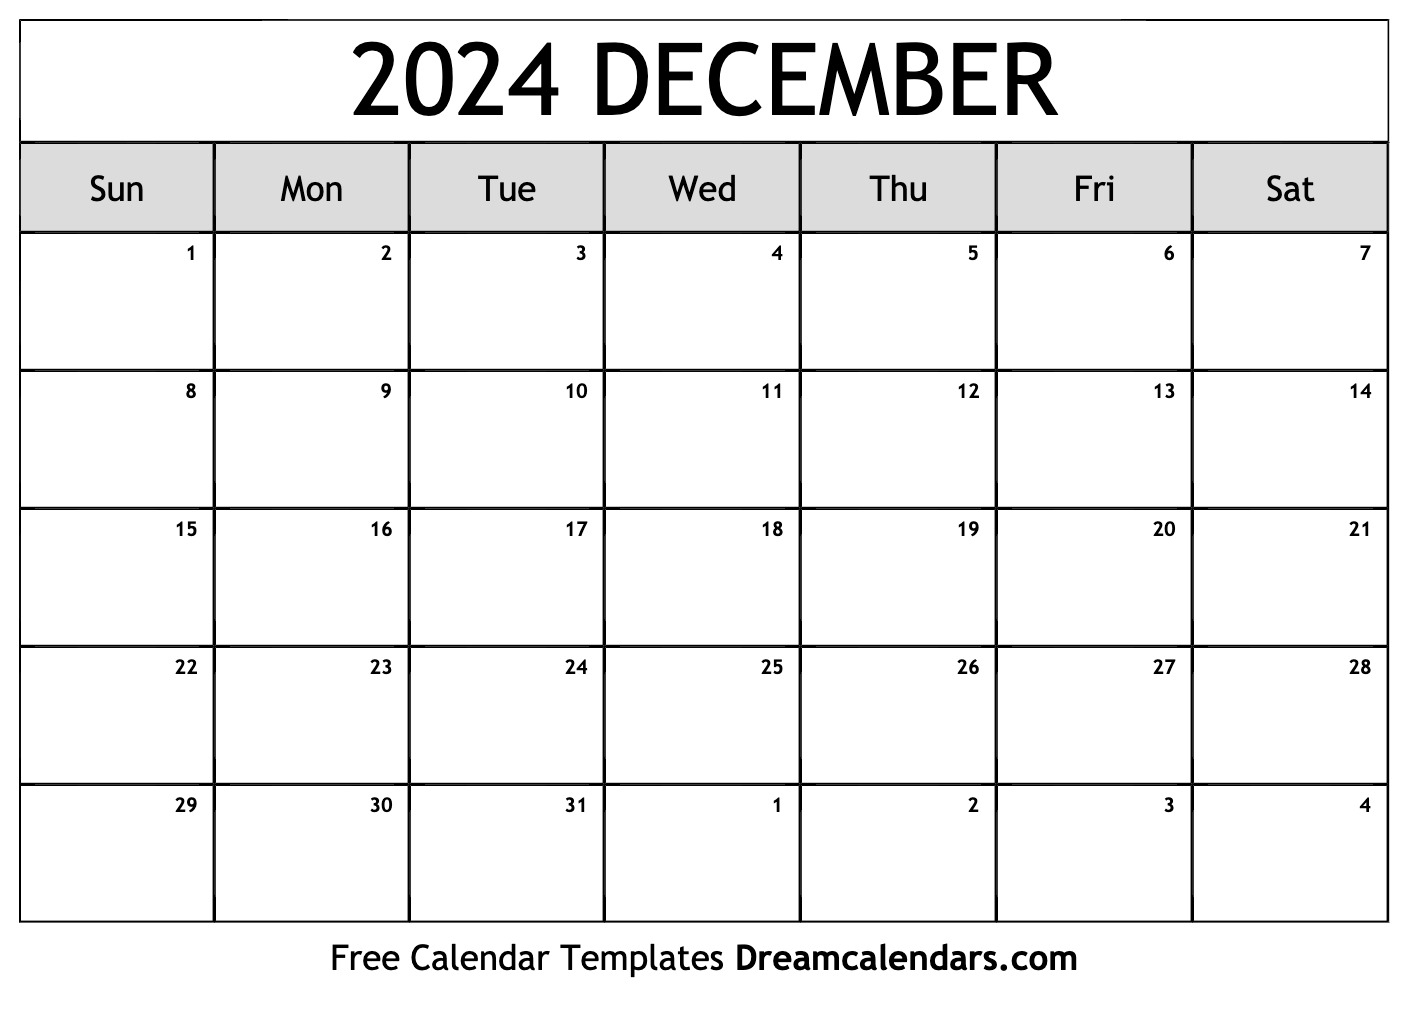 December 2024 Calendar | Free Blank Printable With Holidays for December 2024 Calendar Printable Free